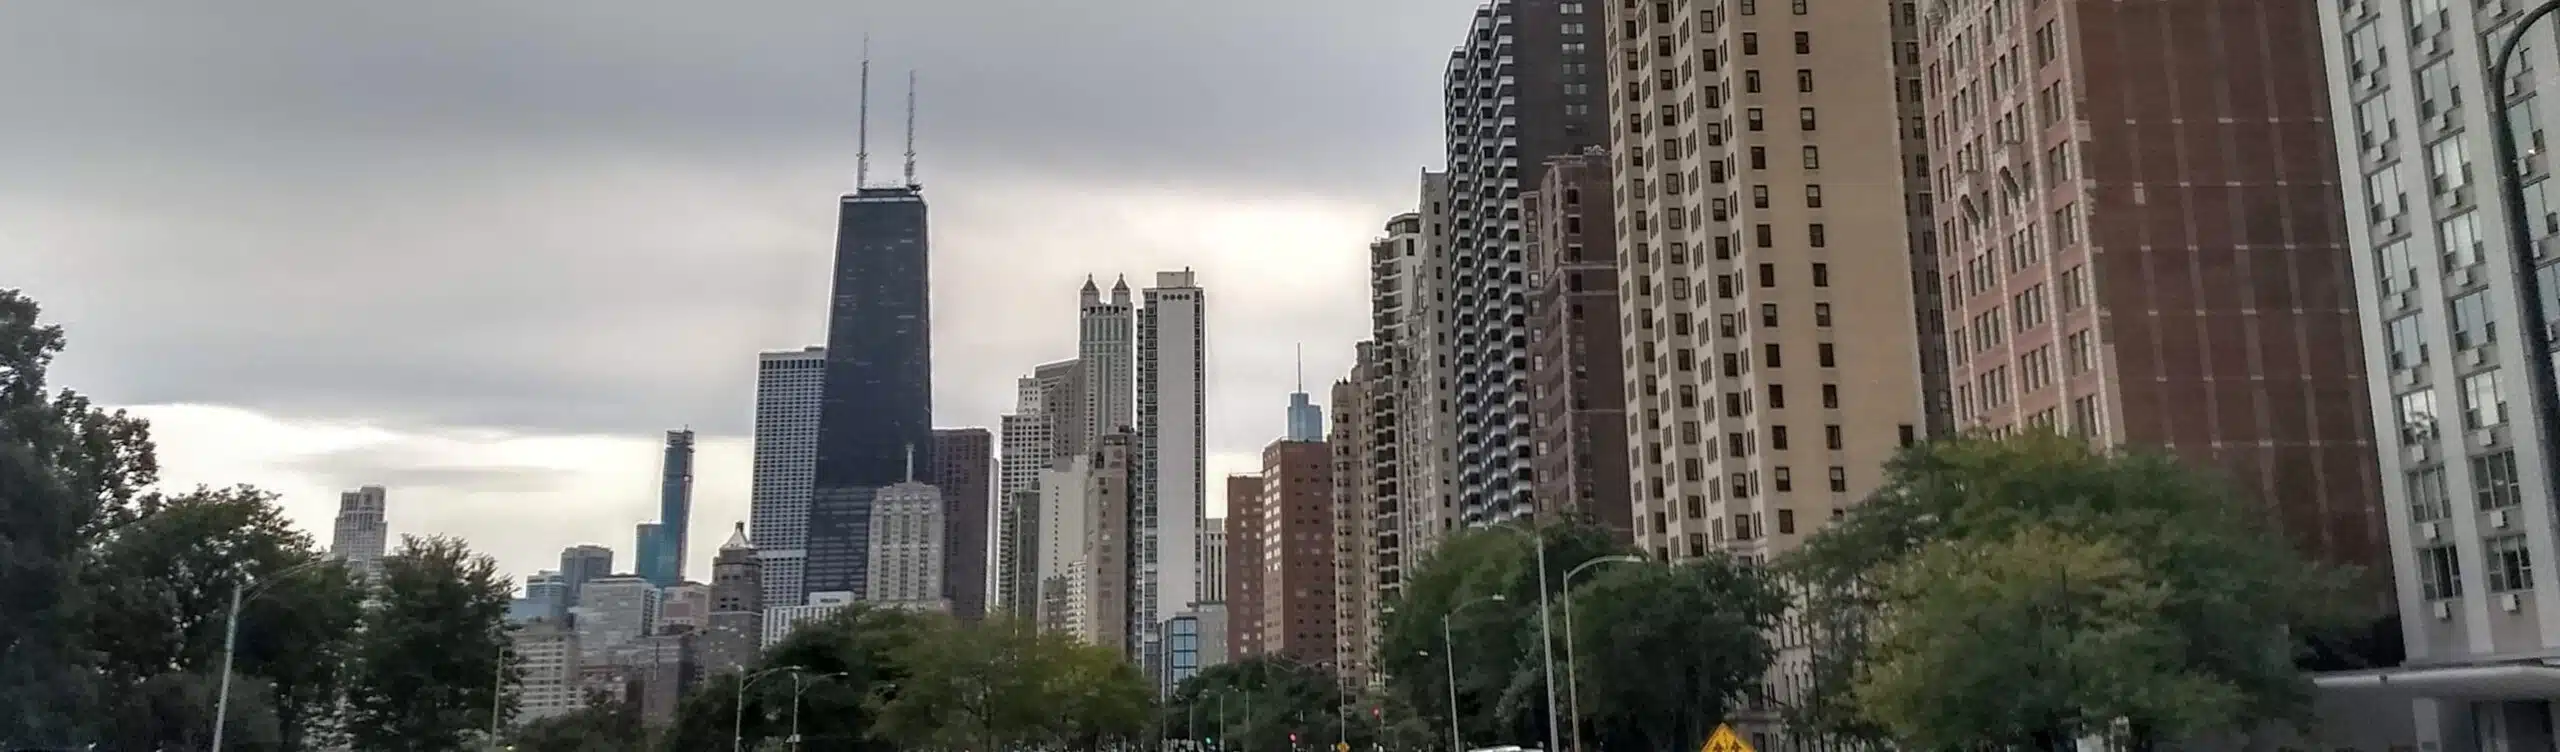 Chicagoland Area Skyline